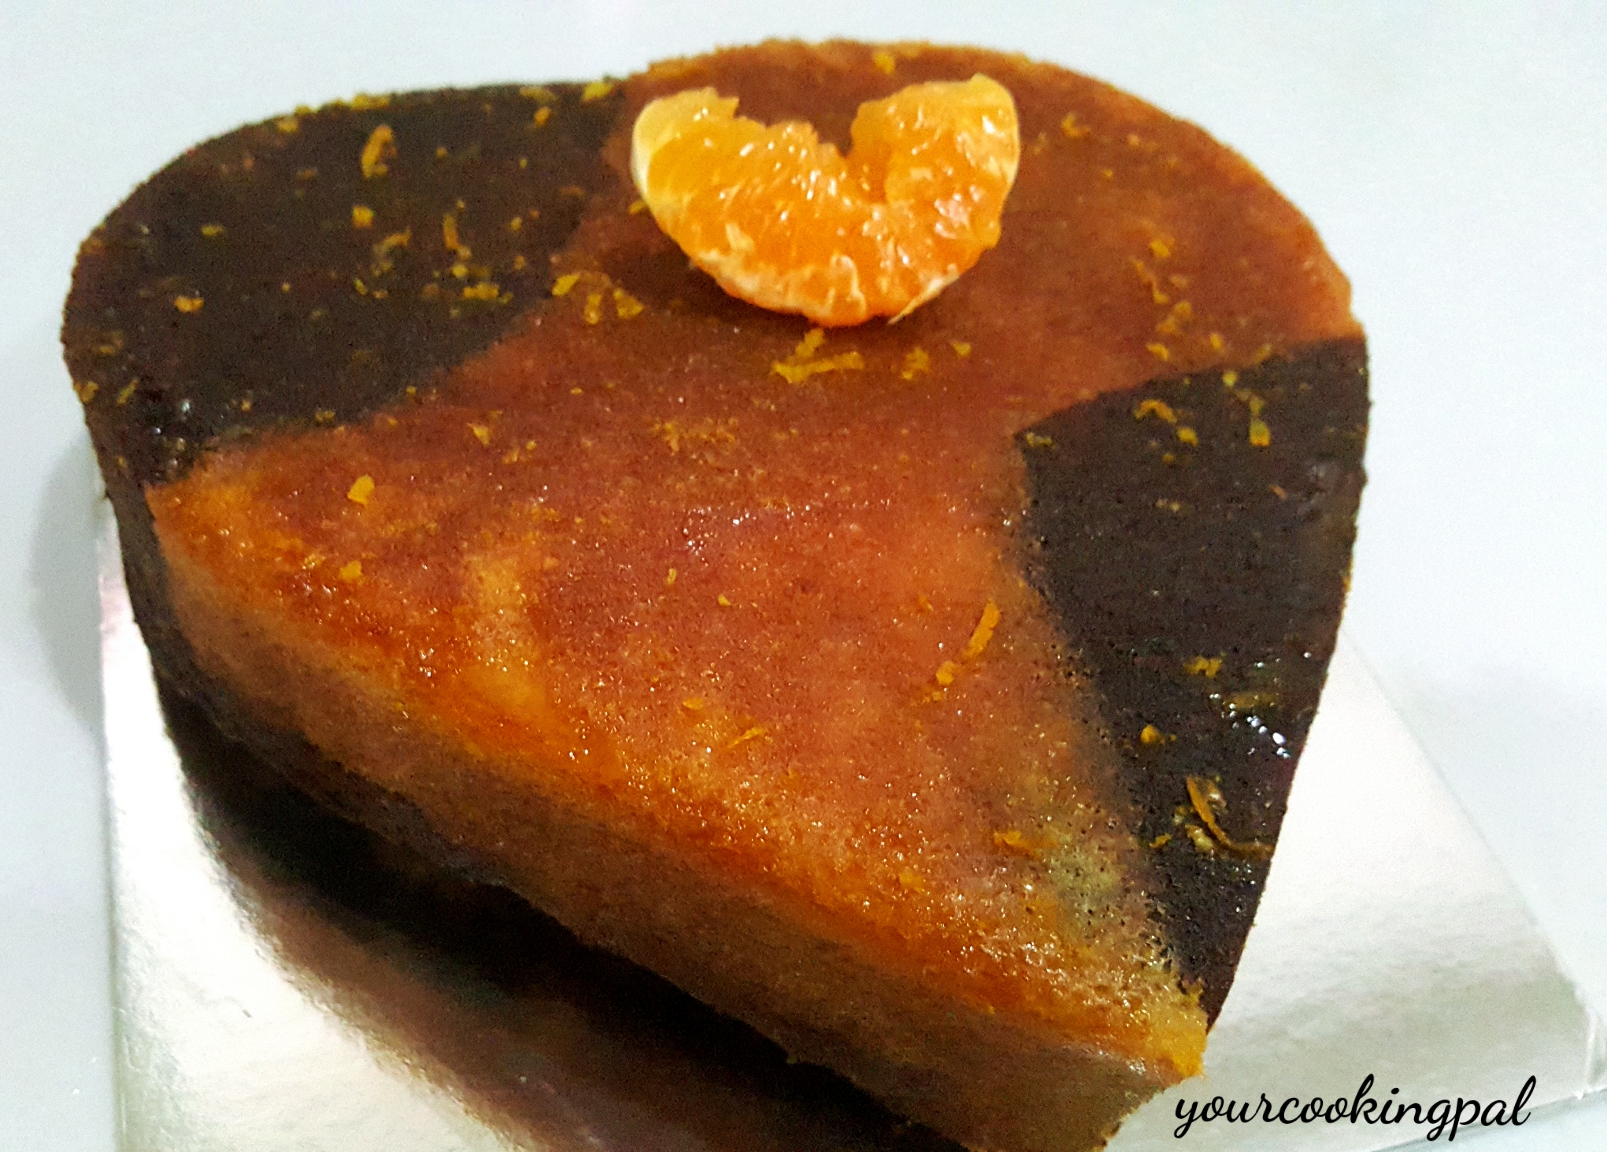 Orange Marble Cake with Orange Sugar Glaze